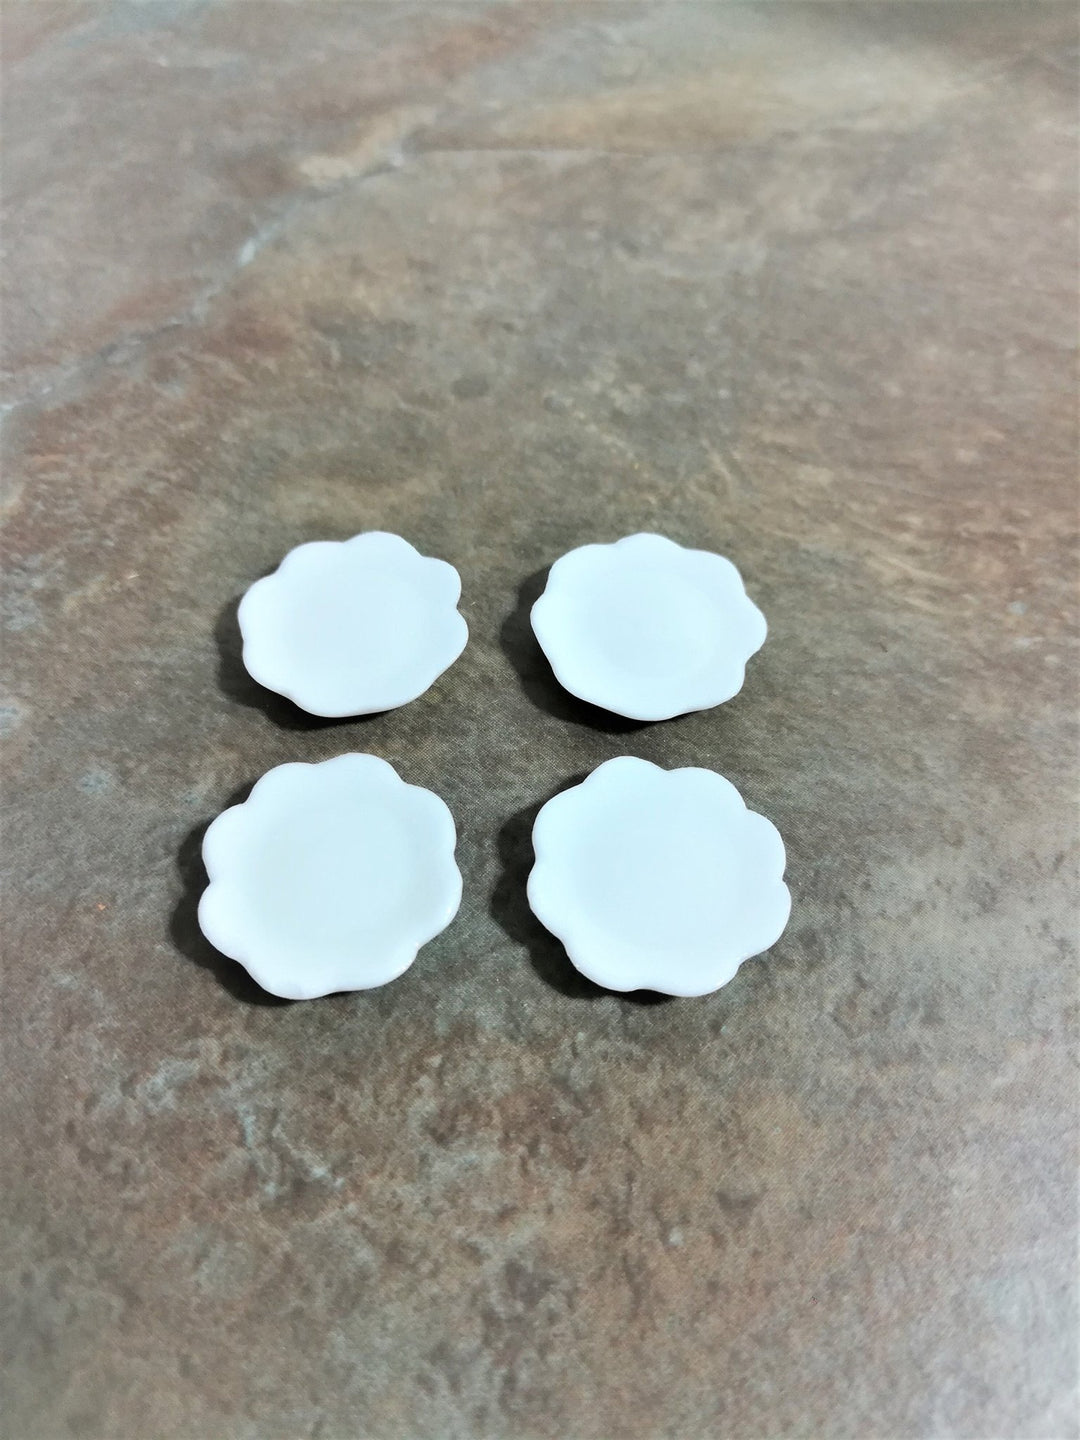 Dollhouse Miniature Small Plates x4 White Ceramic with Scalloped Edge 1:12 Scale 11/16" - Miniature Crush